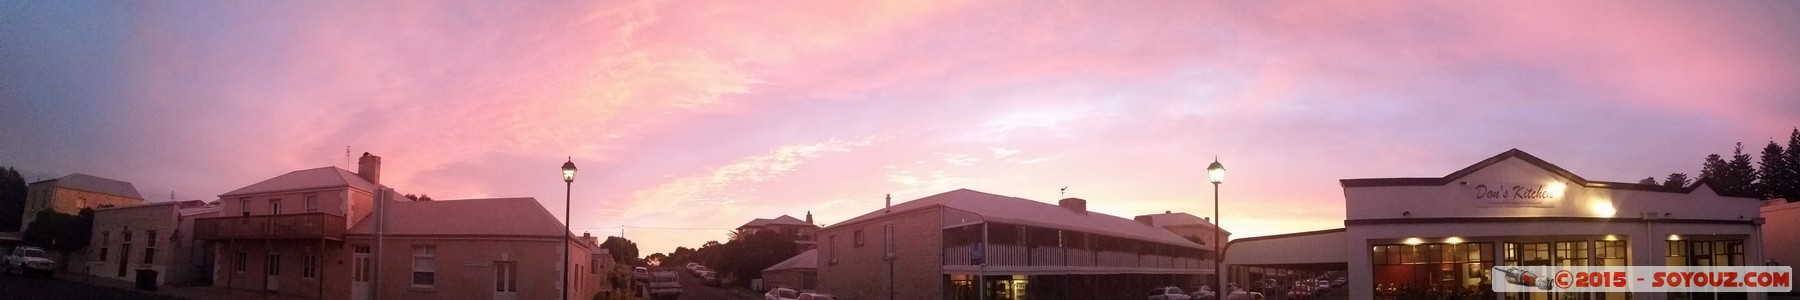 Robe - Spectacular Sunset - Panorama
Mots-clés: AUS Australie geo:lat=-37.16329972 geo:lon=139.75631141 geotagged Robe South Australia sunset Lumiere panorama